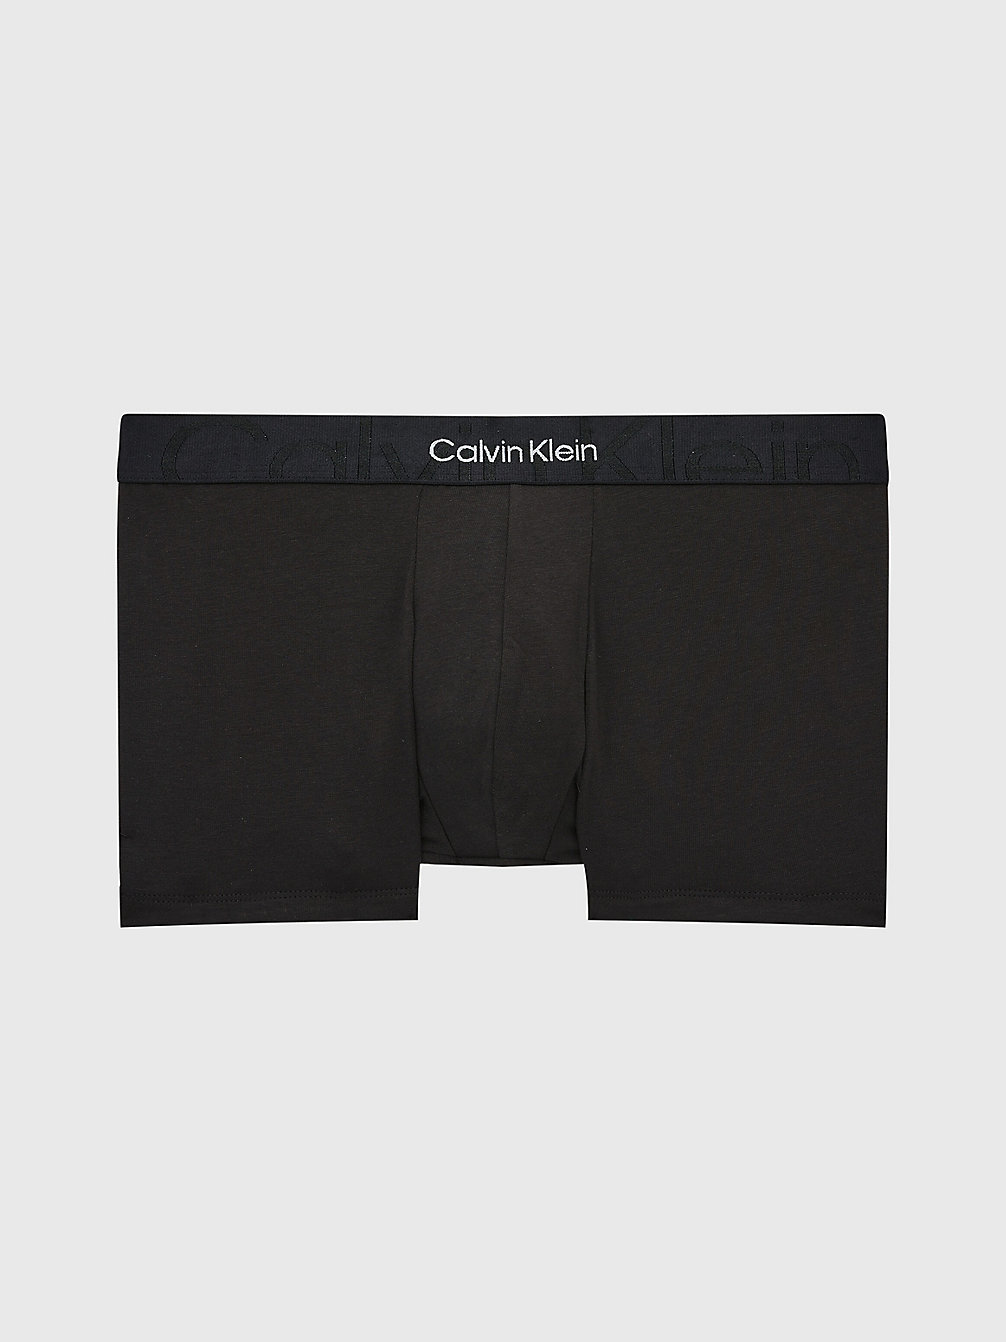 BLACK > Boxershorts – Embossed Icon > undefined Herren - Calvin Klein